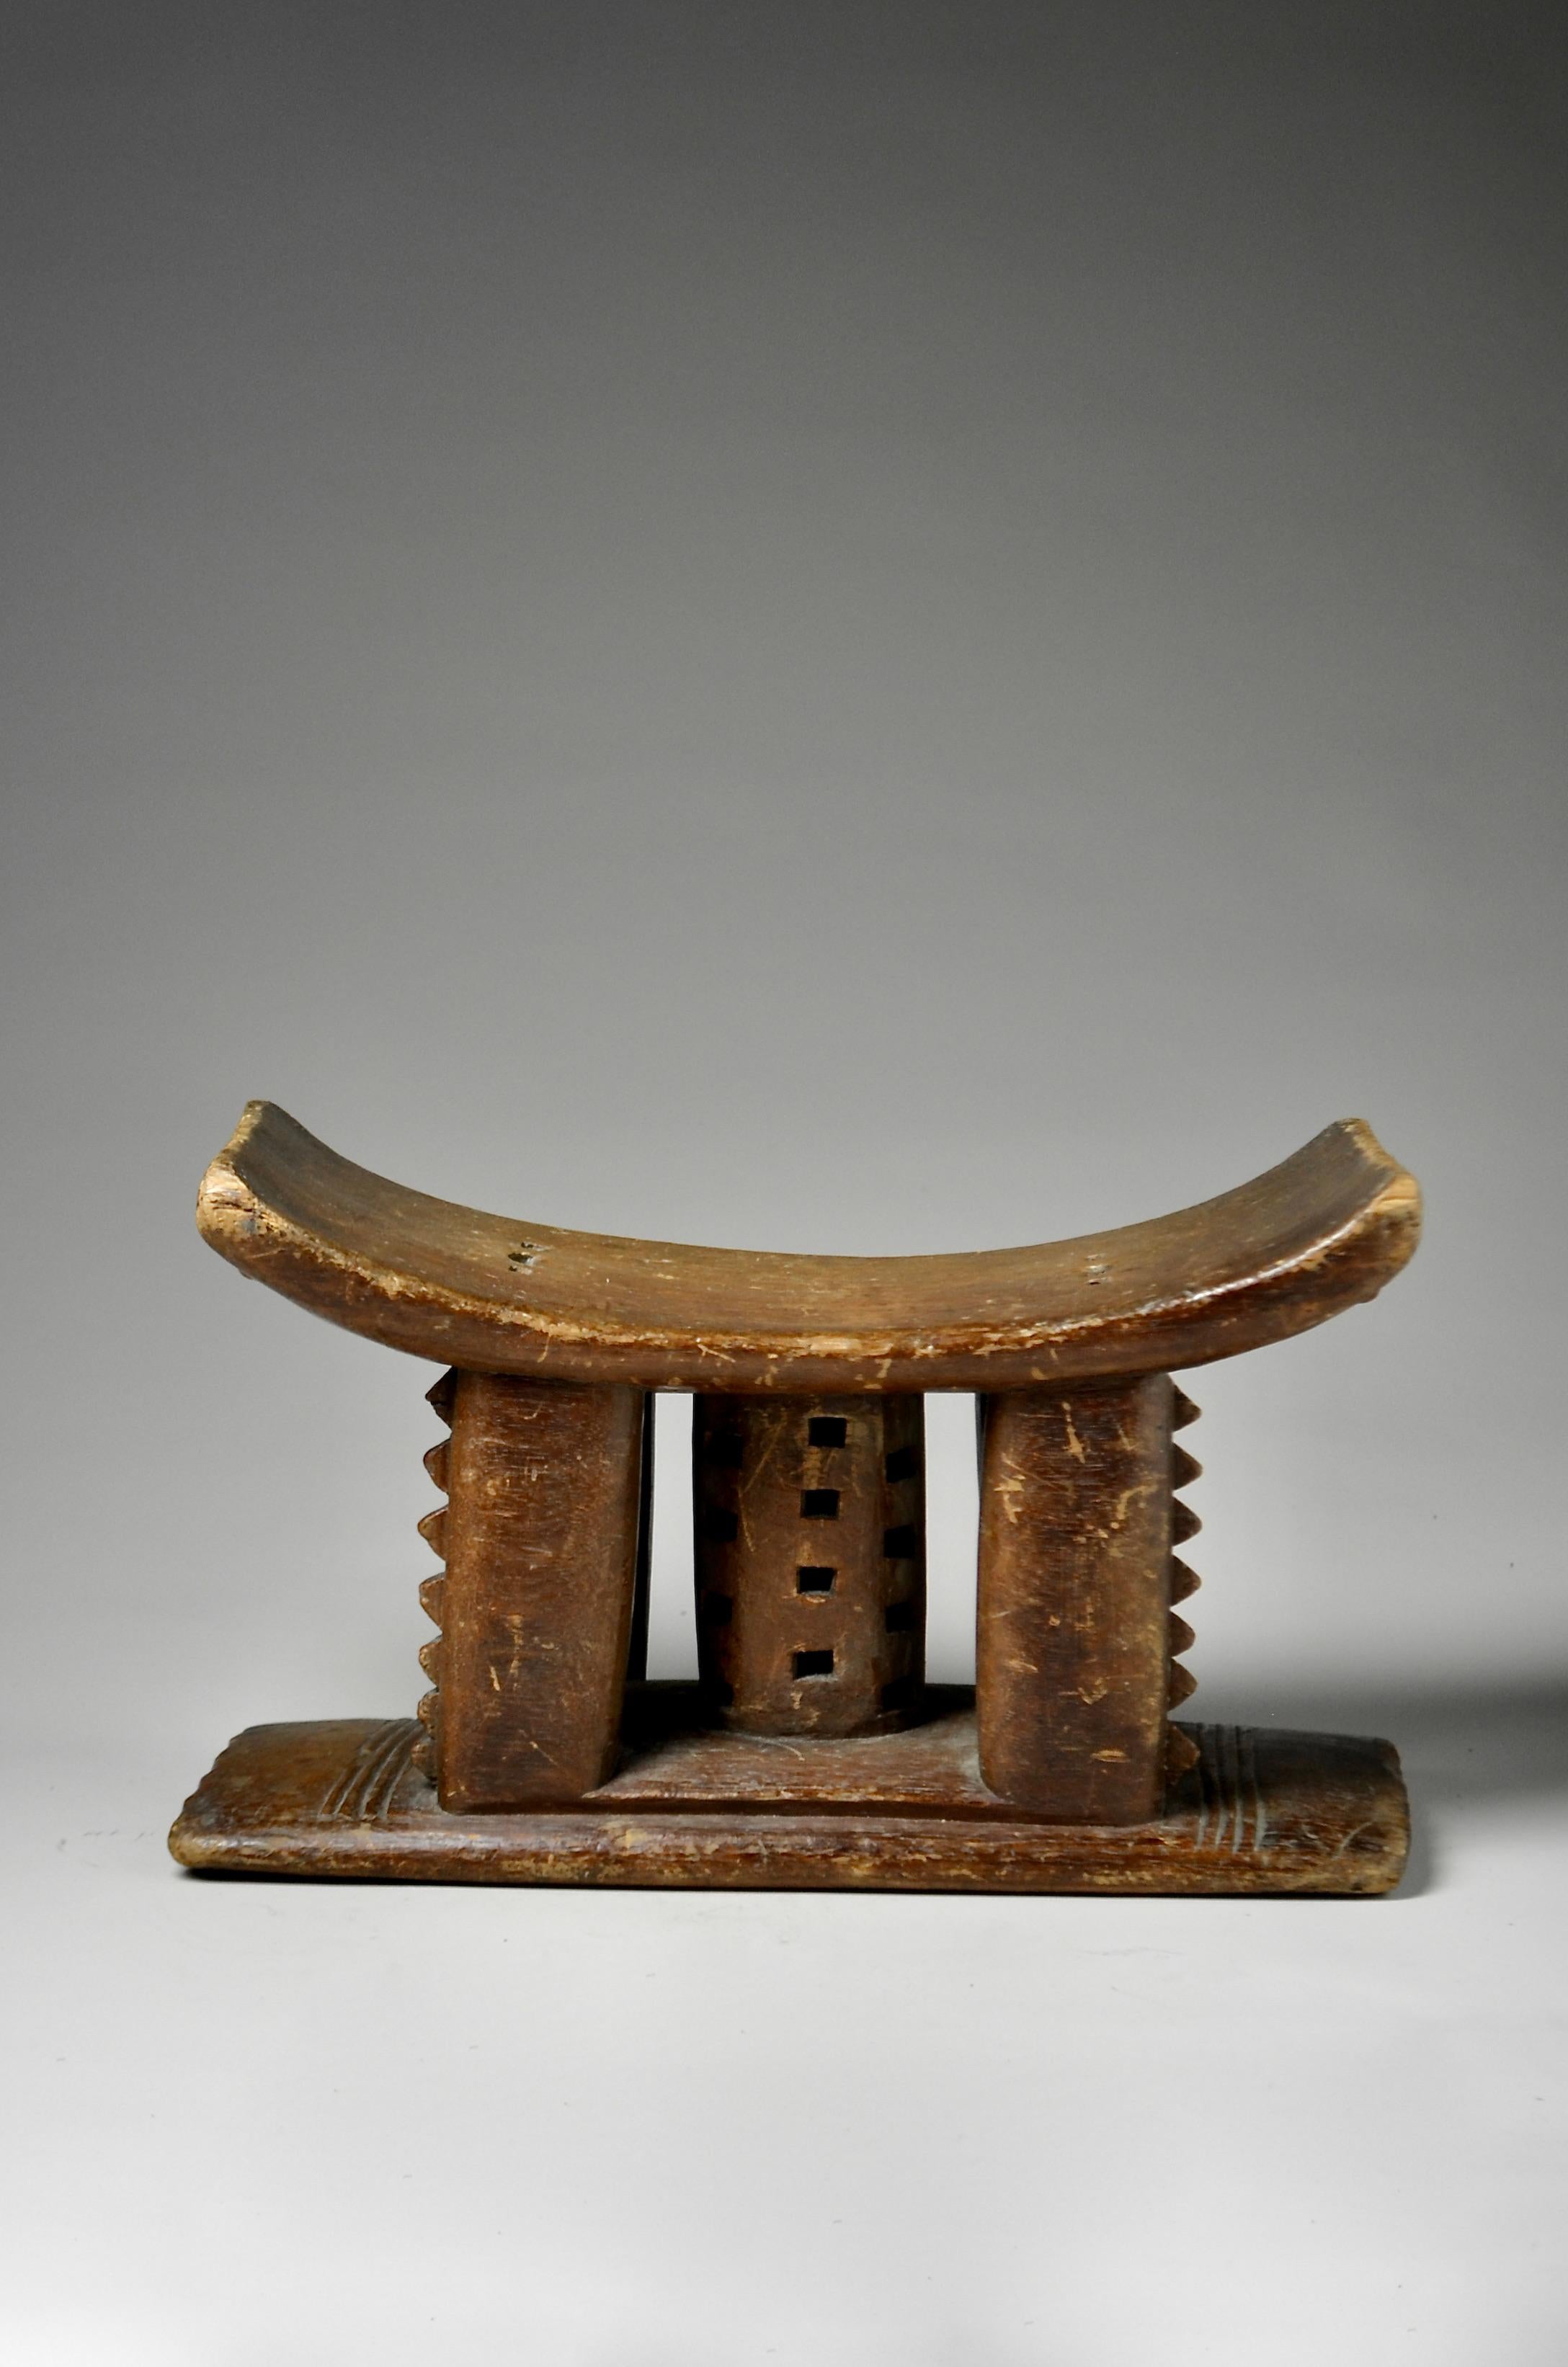 Asante (Ashanti) stool
mmaa gwa
Ghana
Wood
20cm x 33cm